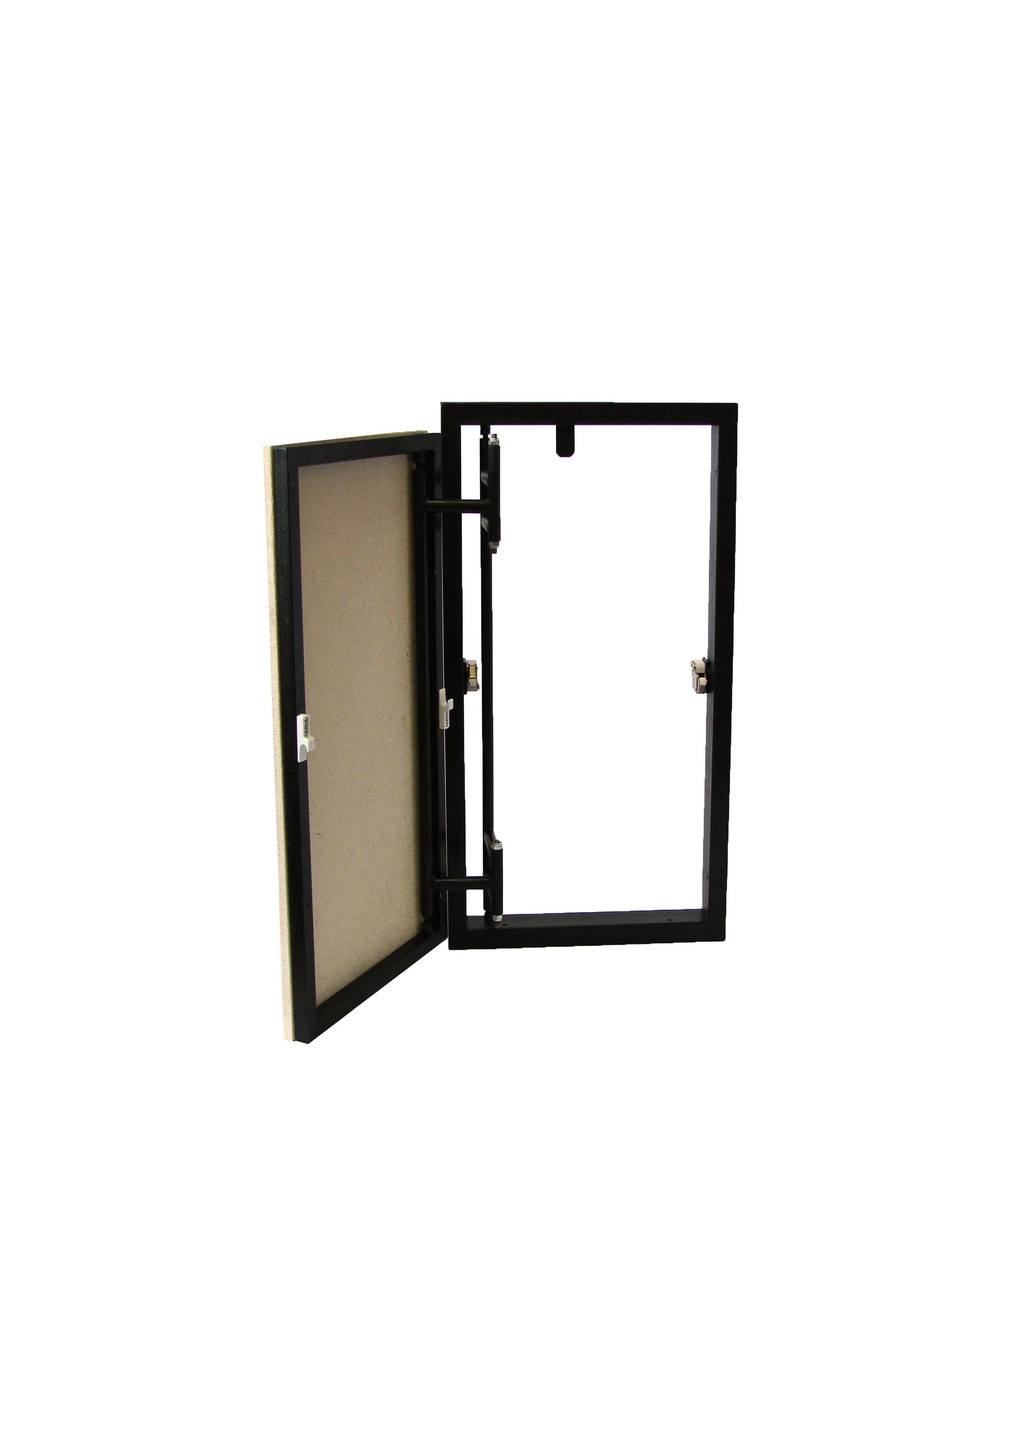 Ревизионный люк скрытого монтажа под плитку нажимного типа 300x800 ревизионная дверца для плитки (1132) S-Dom (264208776)